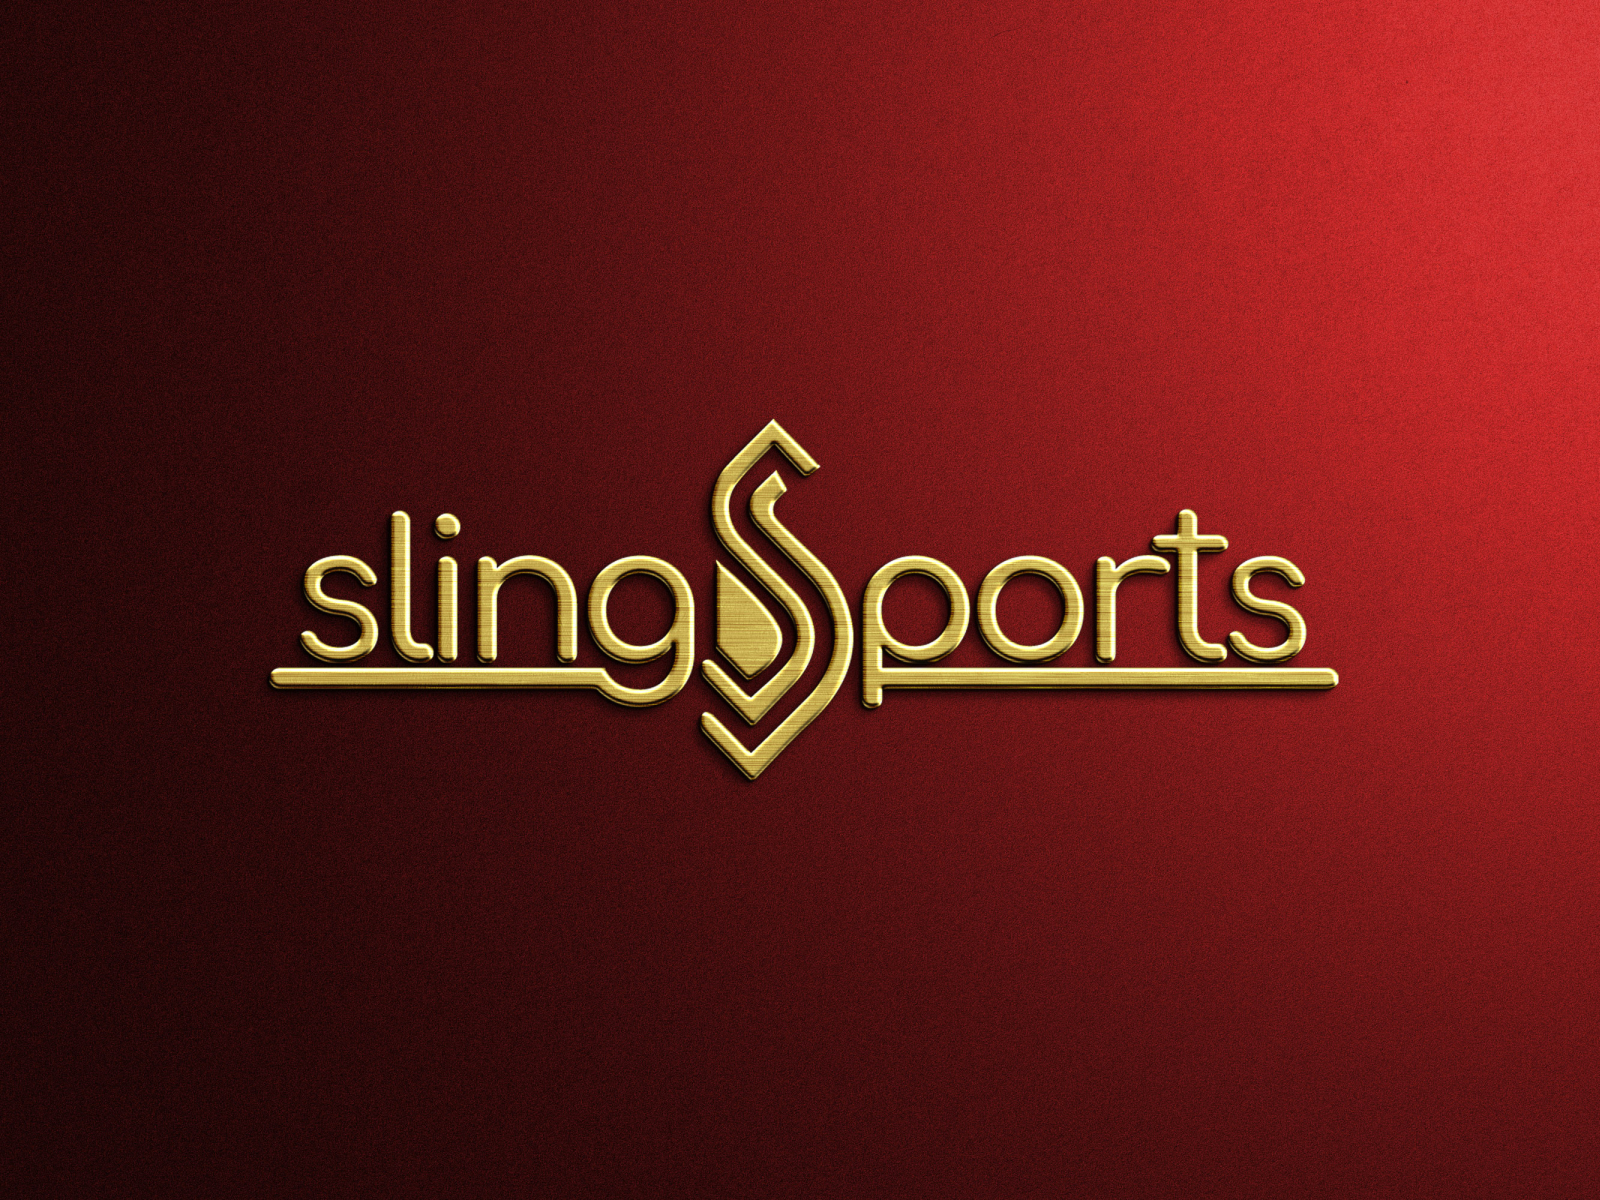 Sling sports logo design by Designtops on Dribbble